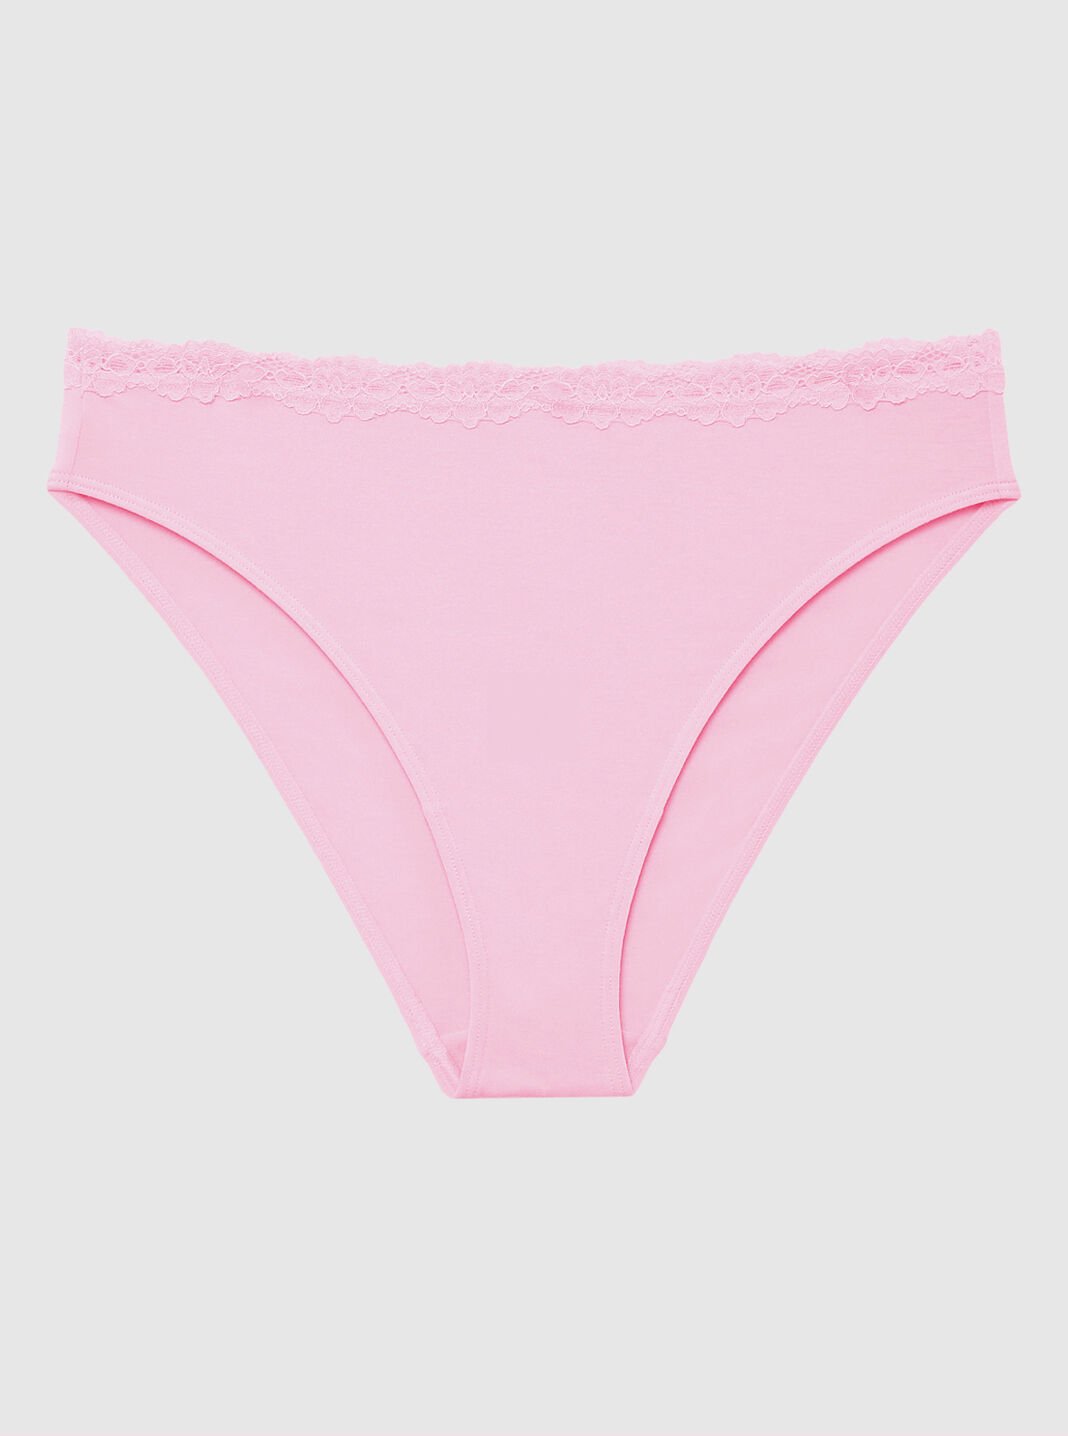 Plato's Closet Cranberry, Pa - ‪New Victoria's Secret underwear, with tags!  Sizes are L/XL!🎀💁🏼🛍❤🌹😍‬